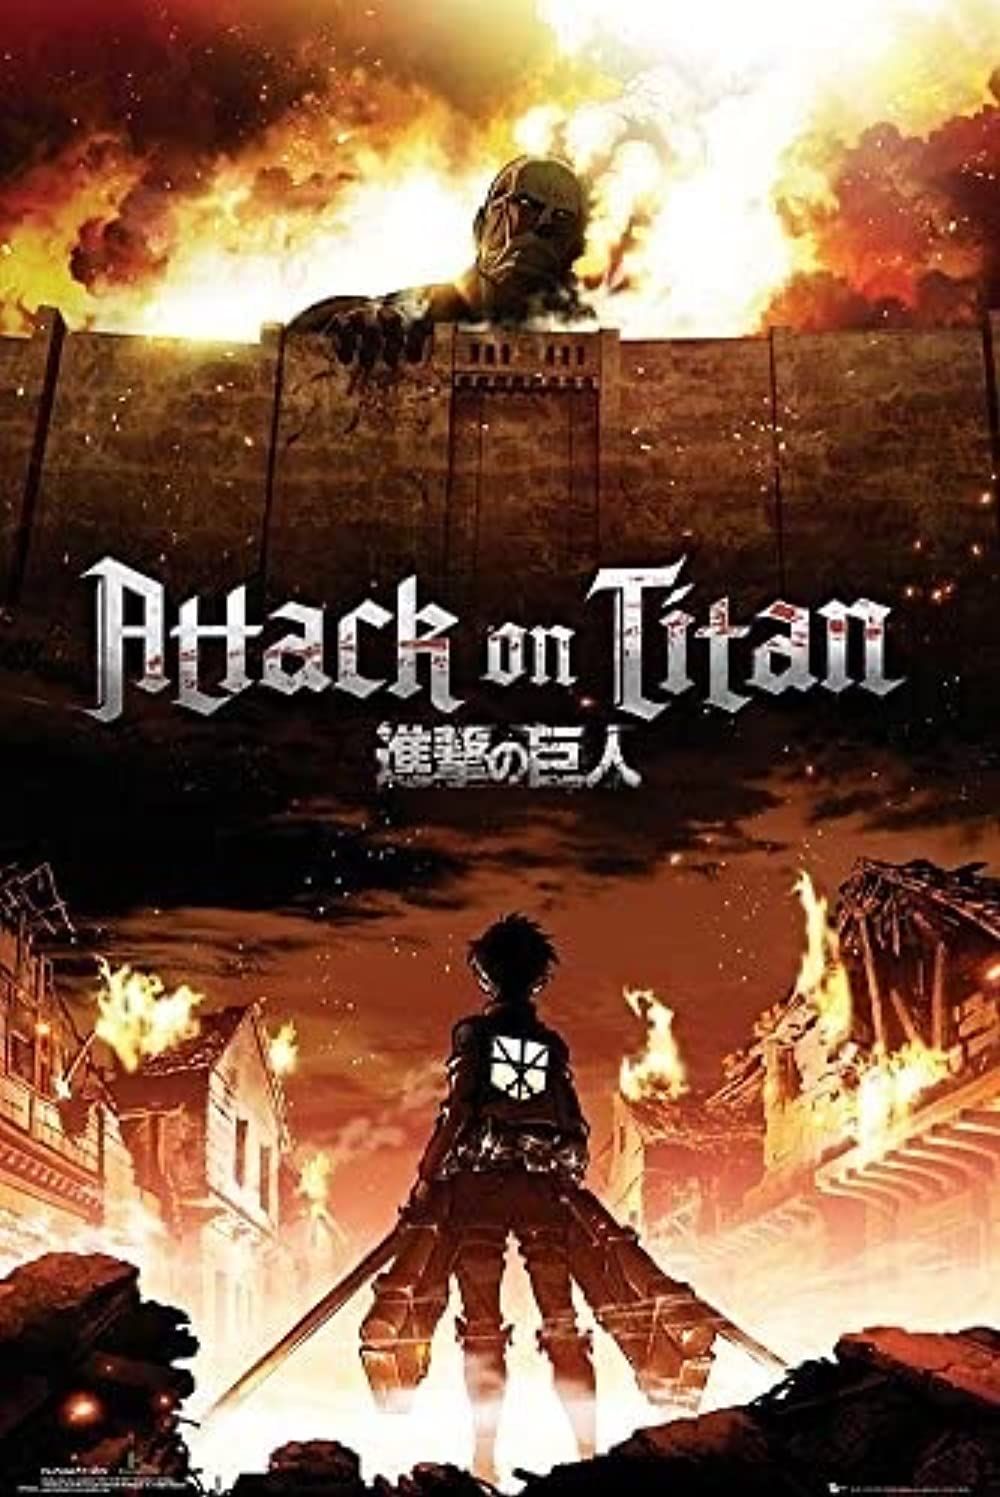 Attack on Titan: The Final Season Part 3' Has Been Announced